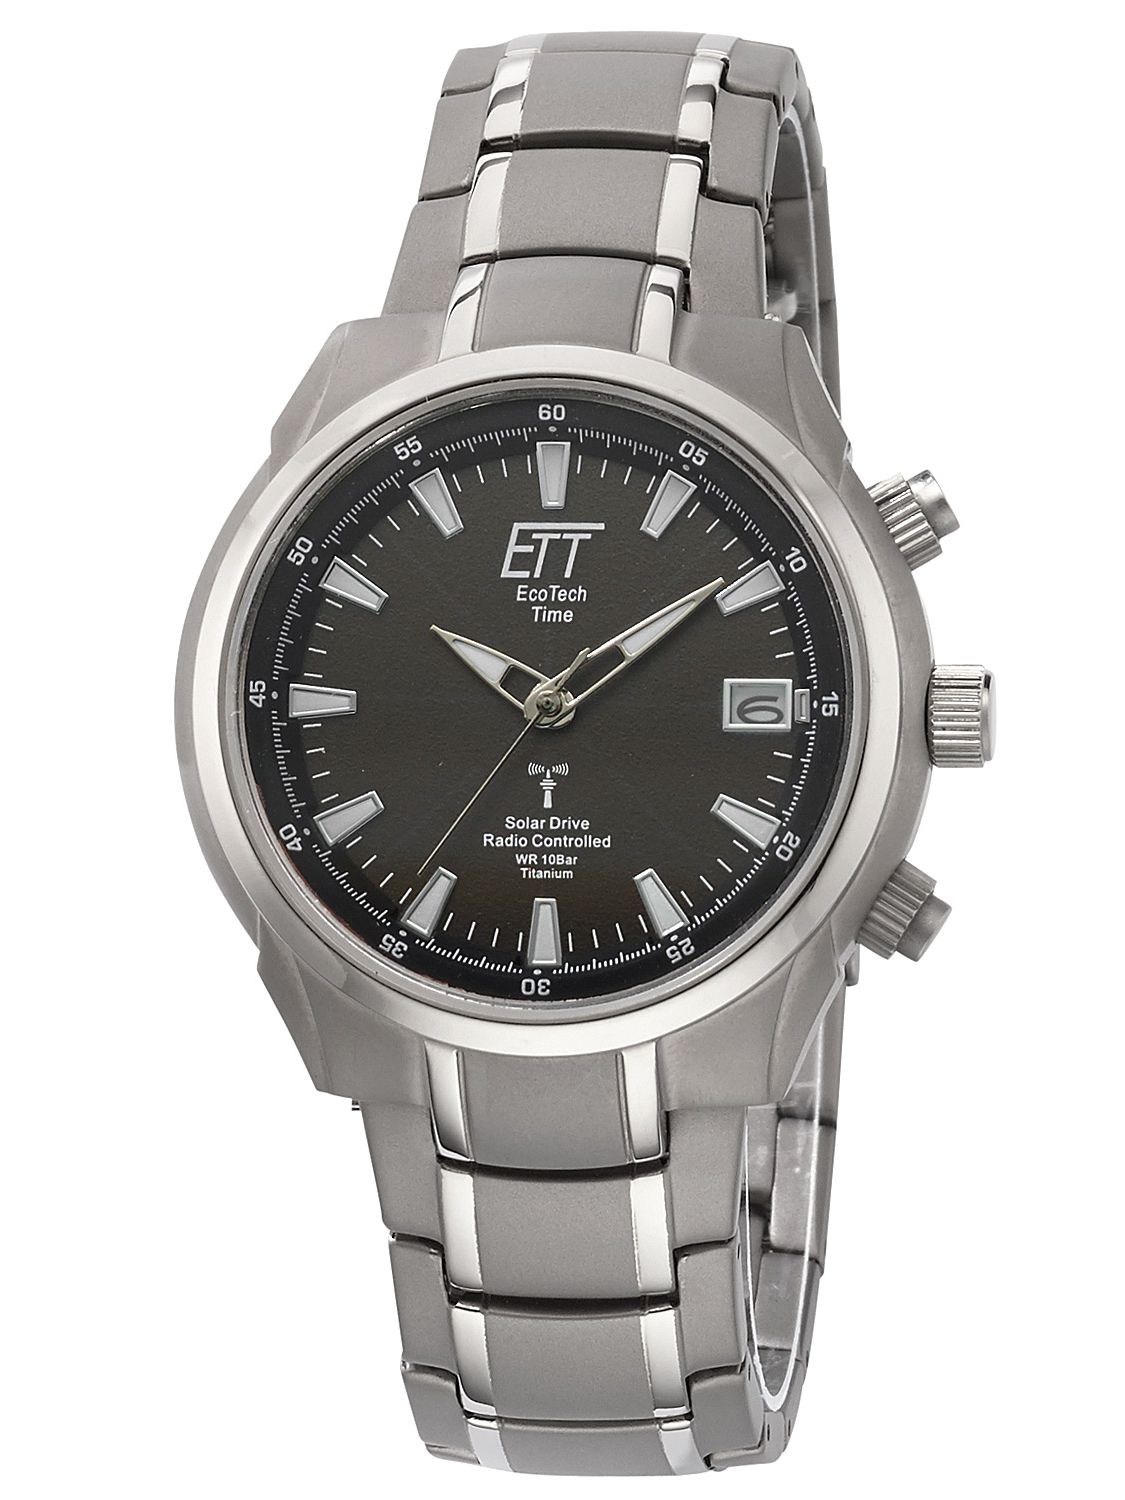 EGT-11340-61M Aquanaut Tech uhrcenter Herren-Armbanduhr Drive Time Funk Eco II ETT • Solar